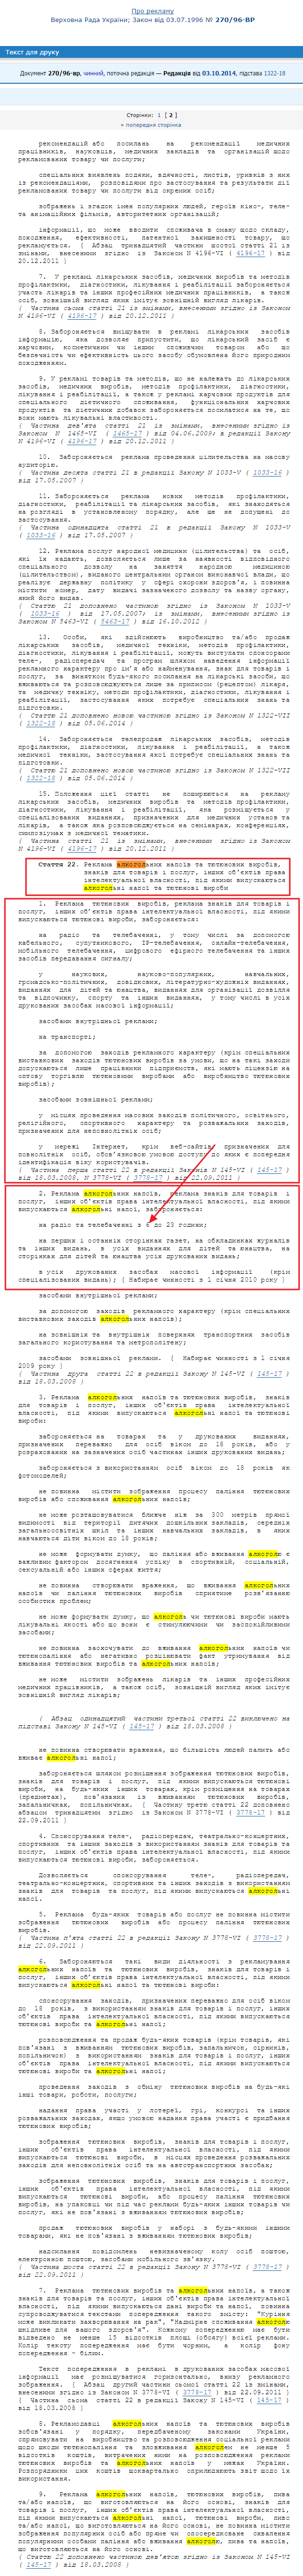 http://zakon2.rada.gov.ua/laws/show/270/96-%D0%B2%D1%80/page2